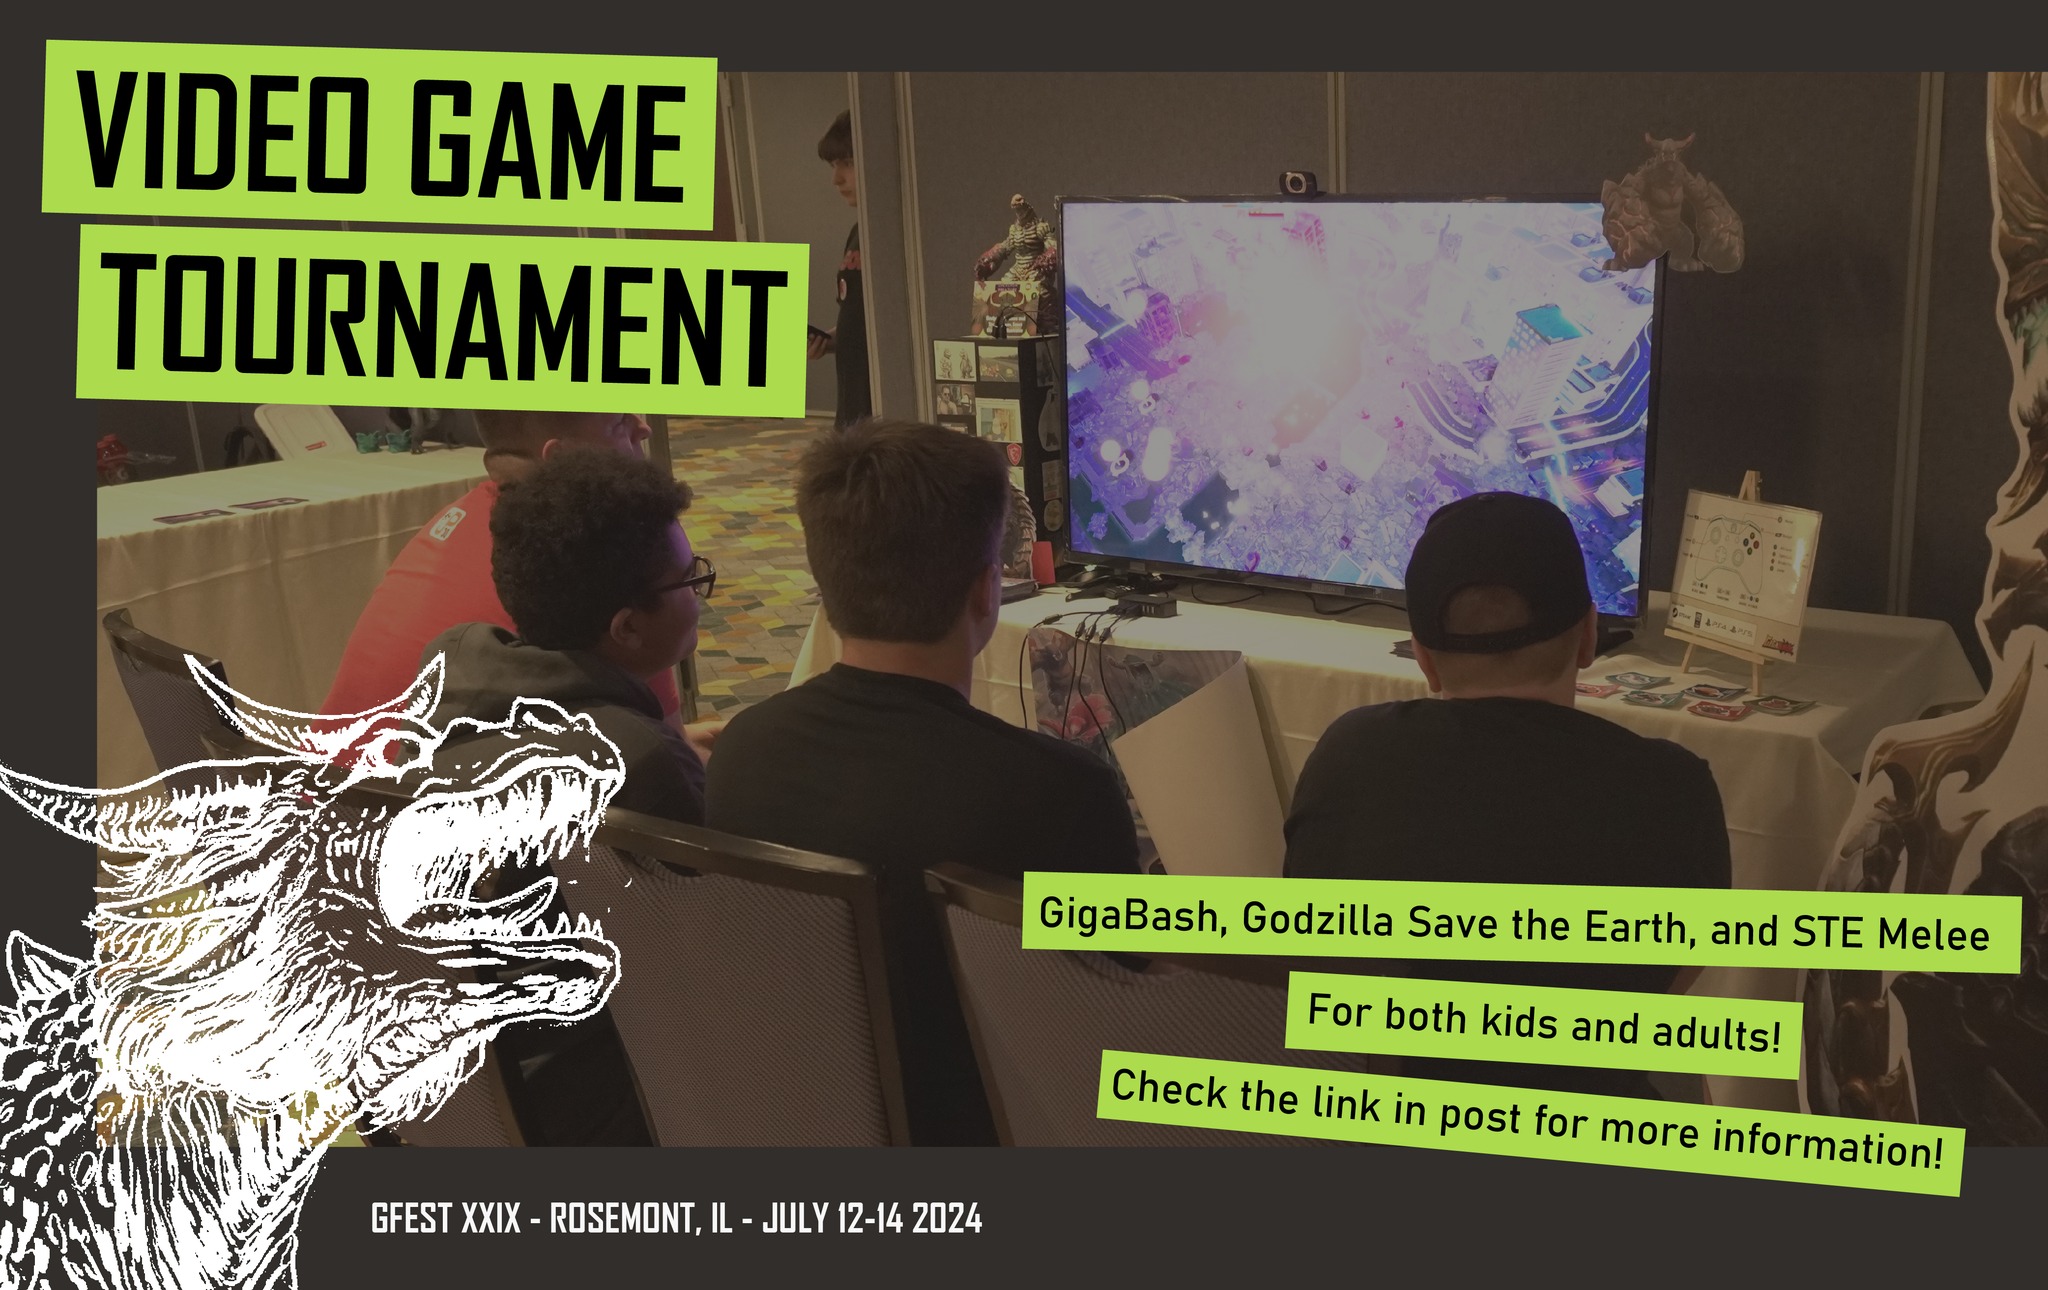 G-FEST Gaming Room & Tournament Info